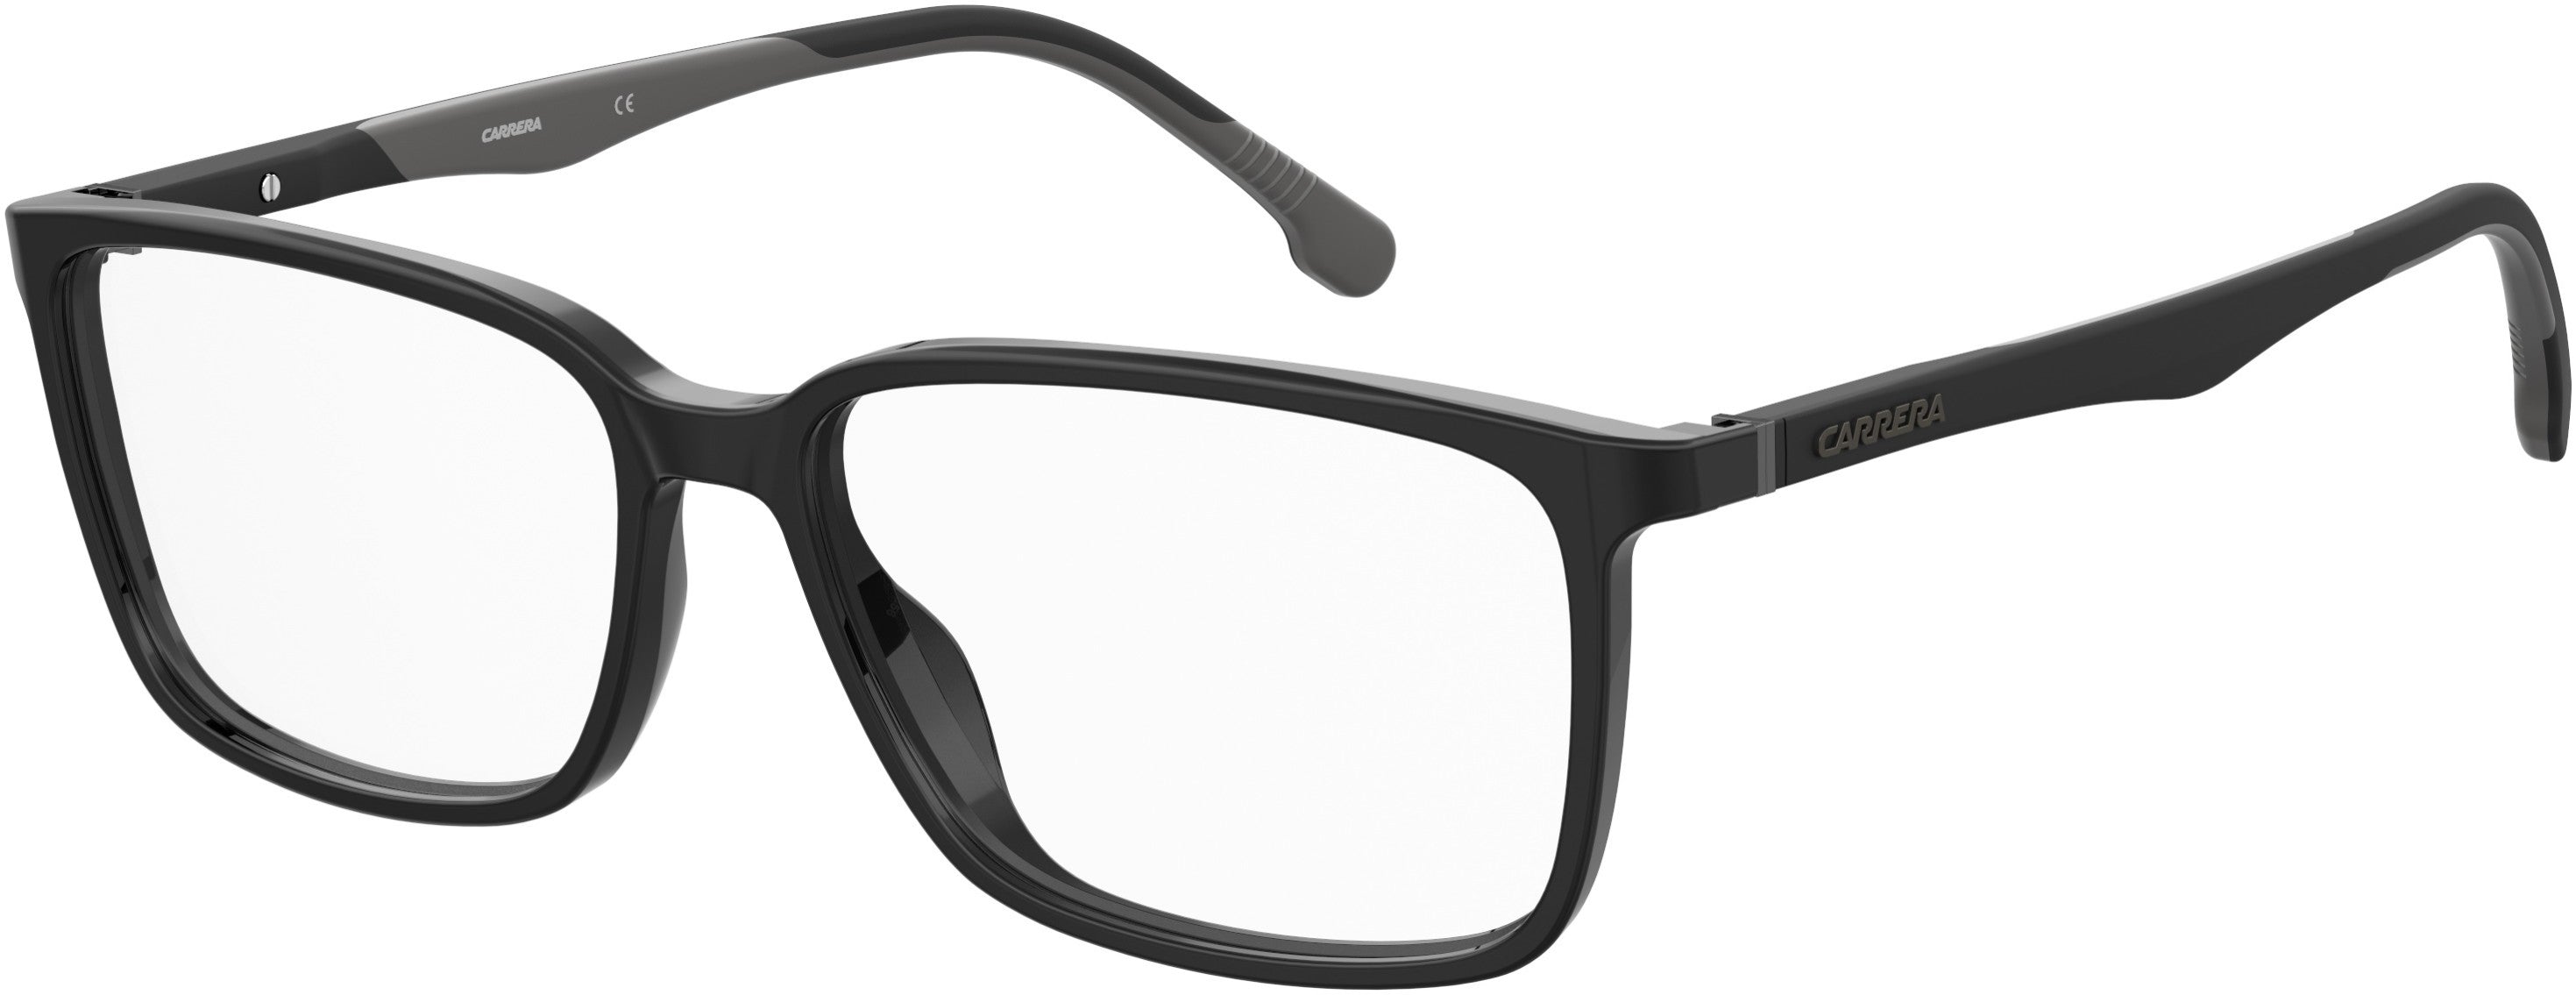  Carrera 8856 Rectangular Eyeglasses 0807-0807  Black (00 Demo Lens)